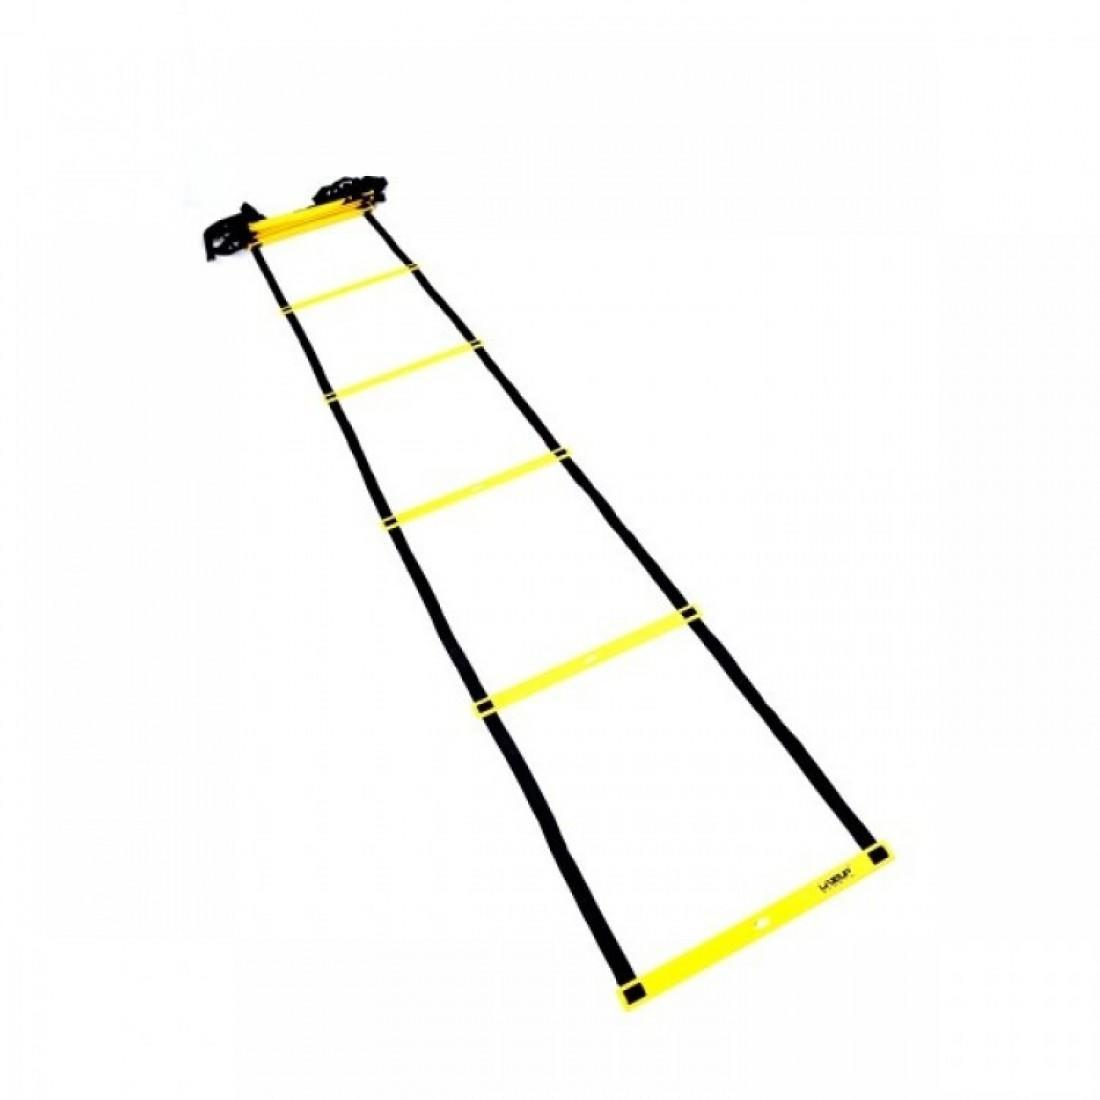 Координационная лесенка LiveUp Agility Ladder (4 m) black/yellow